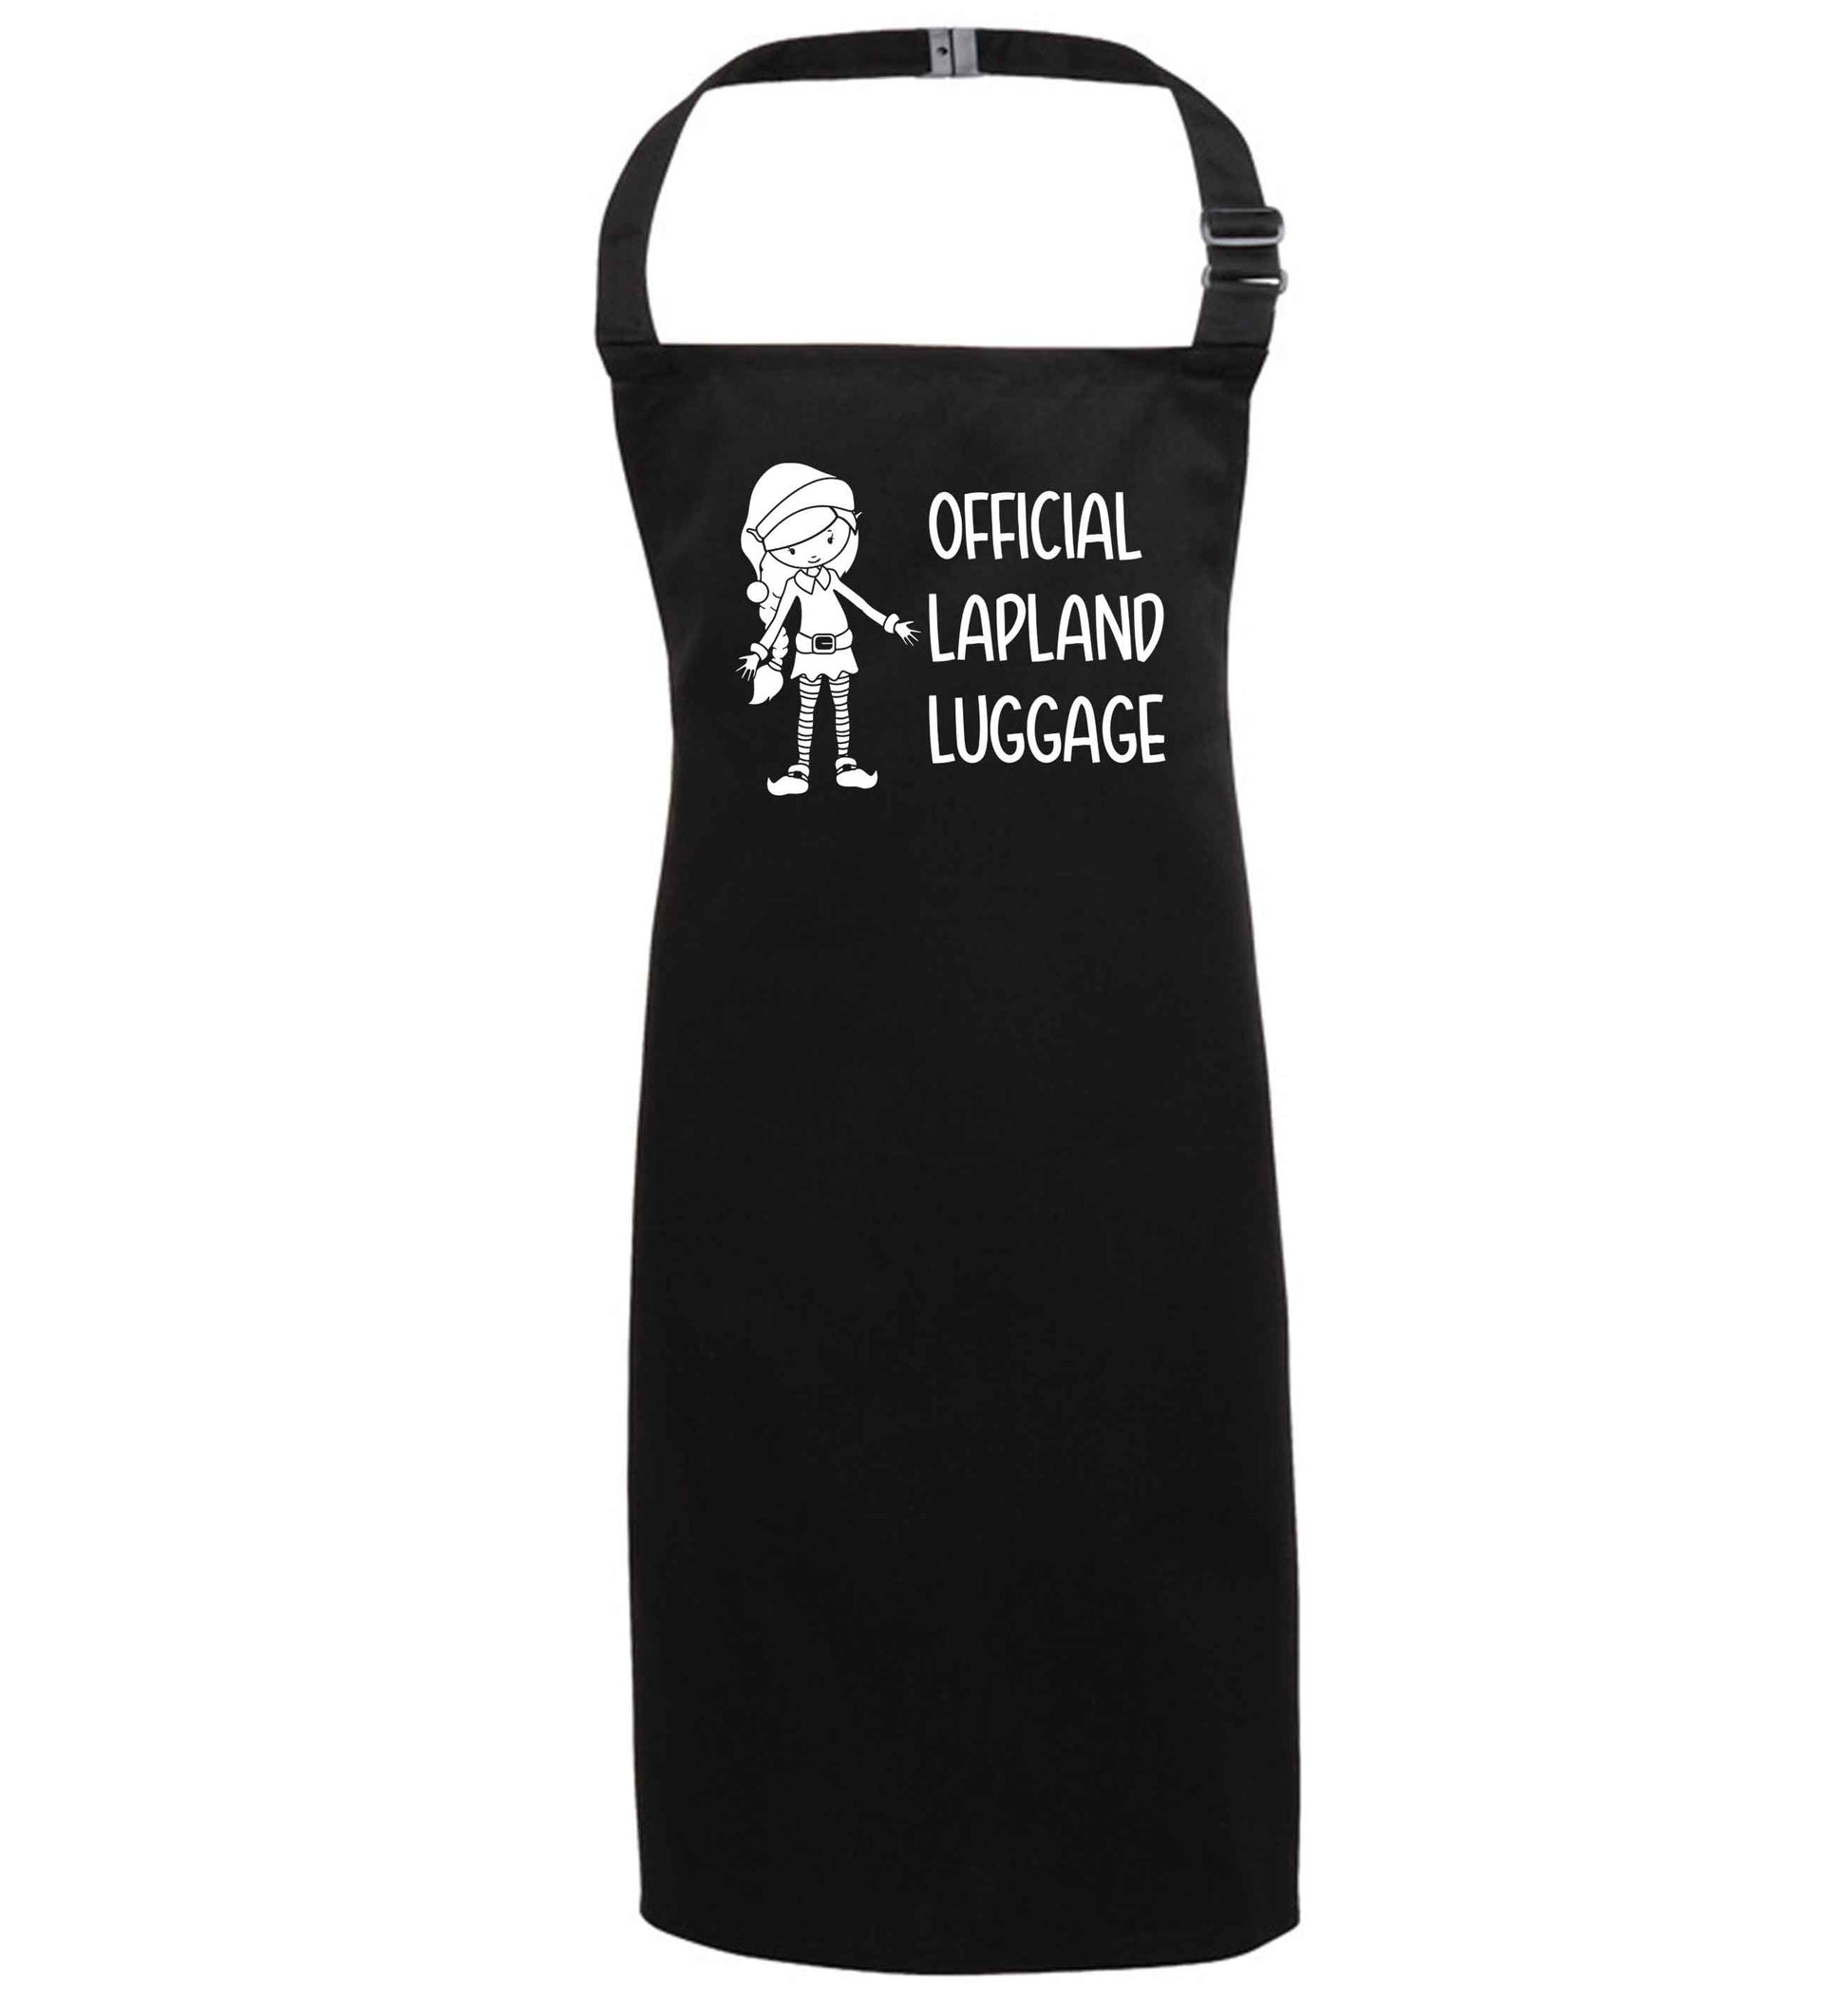 Official lapland luggage - Elf snowflake black apron 7-10 years